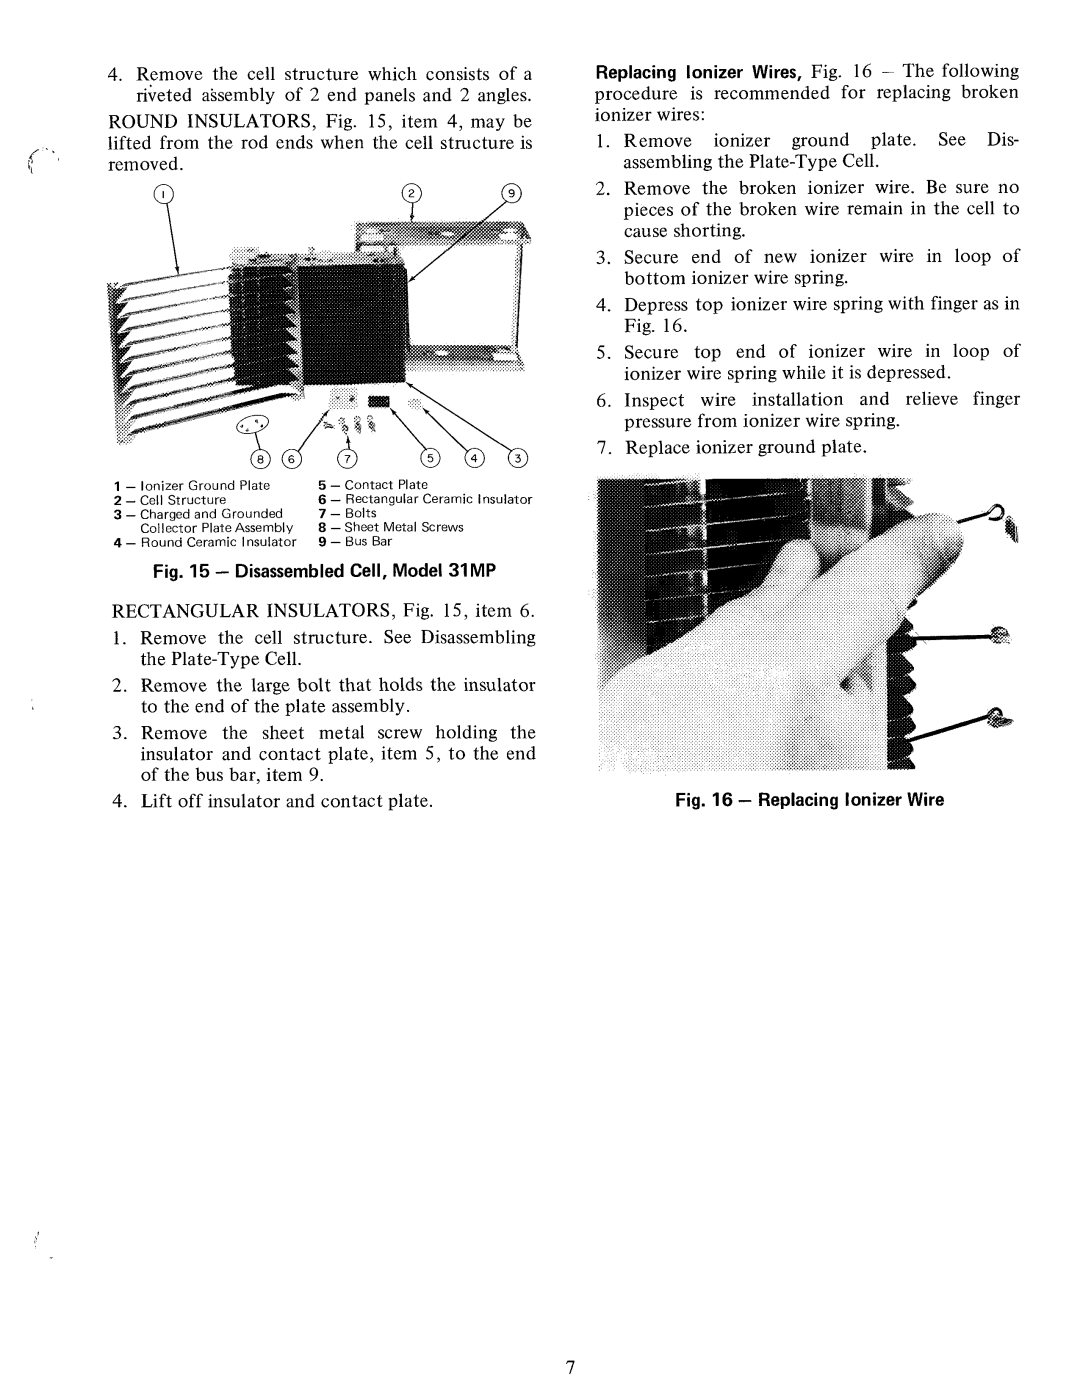 Carrier 31MP, 31MM, 31MC manual 